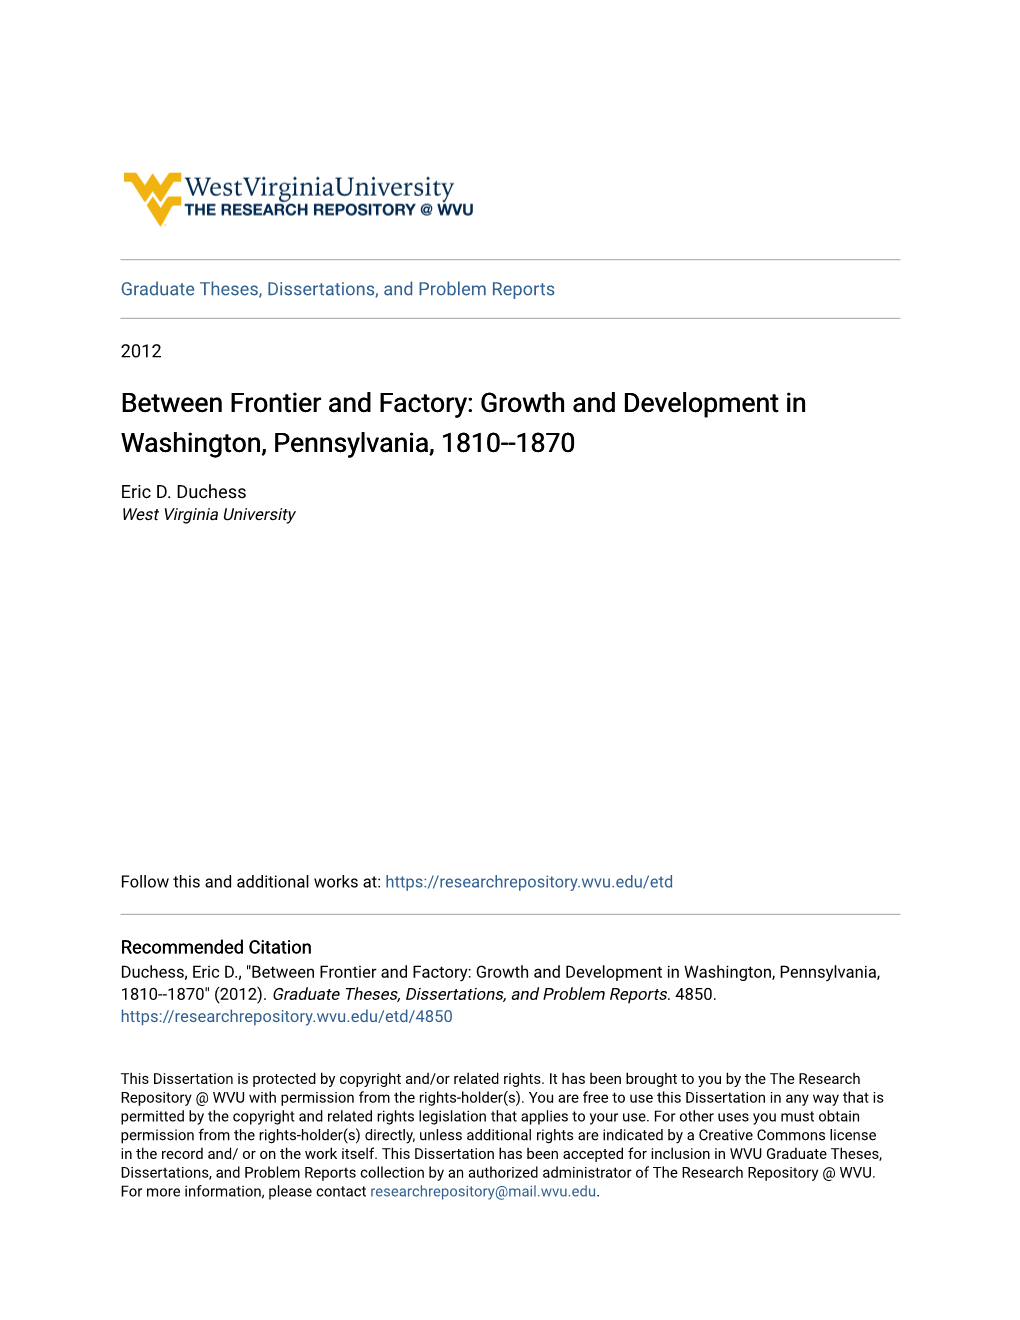 Growth and Development in Washington, Pennsylvania, 1810--1870